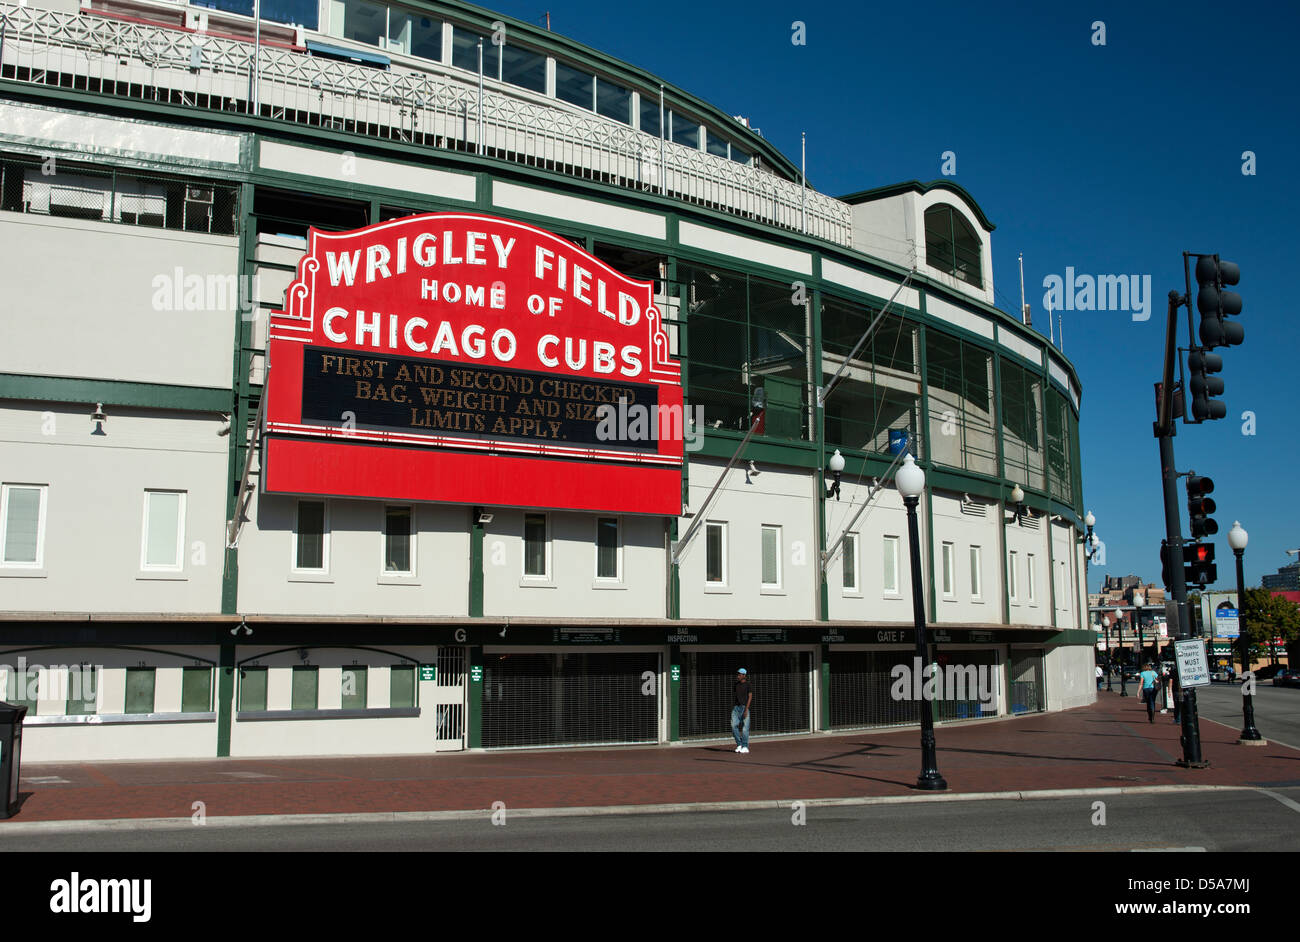 Chicago Cubs baseball team merchandise outside of Wrigley Field baseball  stadium in Chicago, Illinois Stock Photo - Alamy